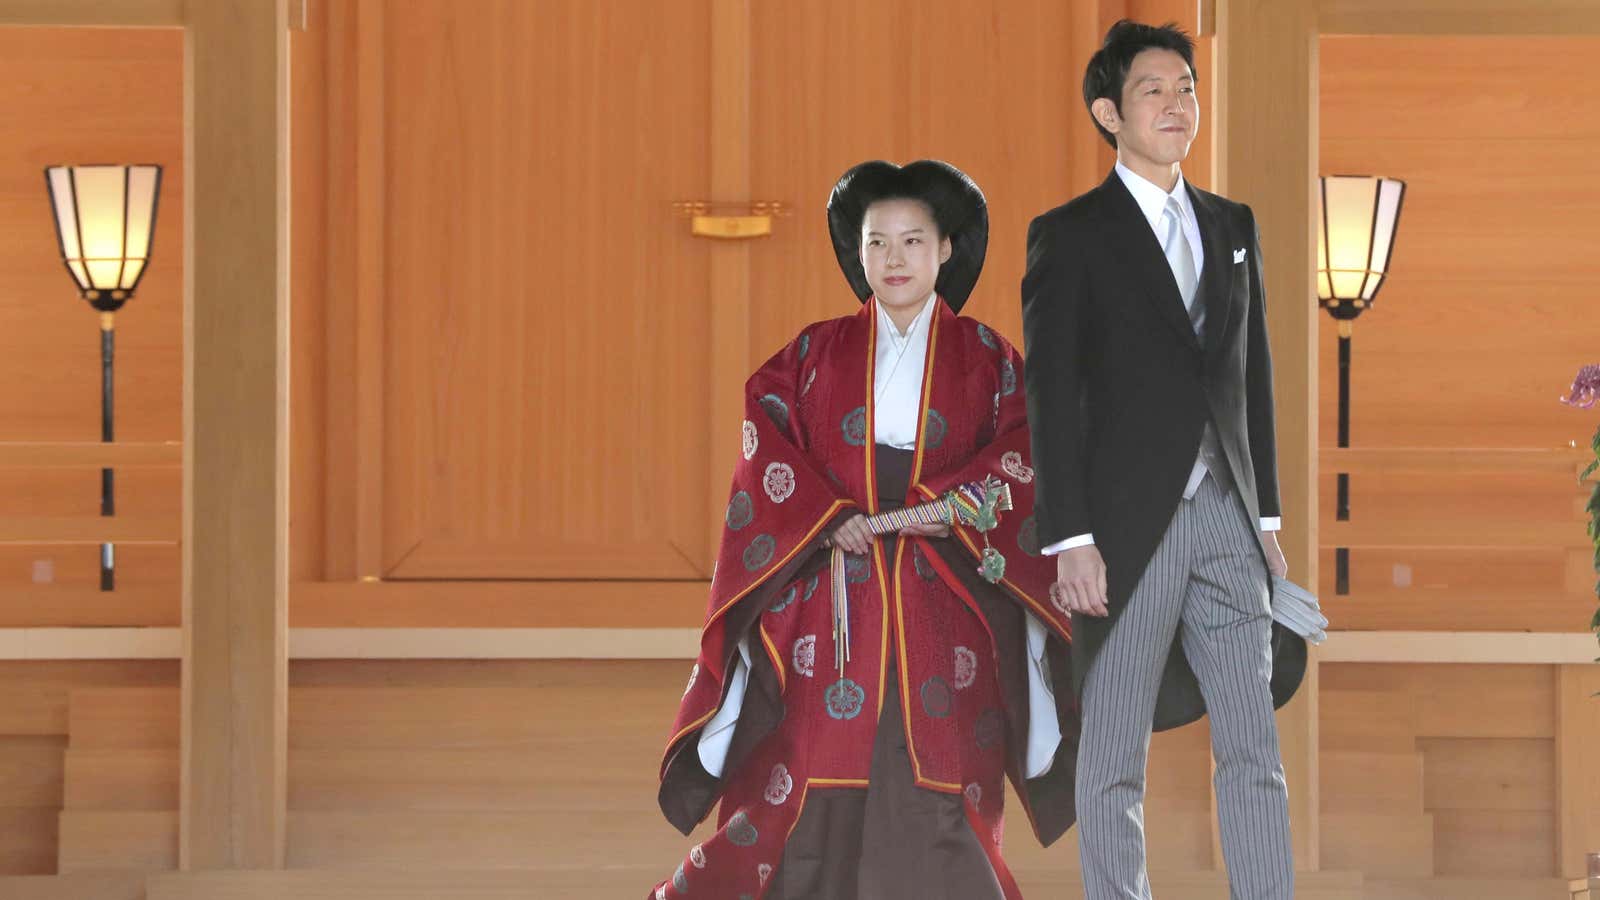 Princess Ayako and her husband Kei Moriya at the Meiji Shrine in Tokyo, Japan.